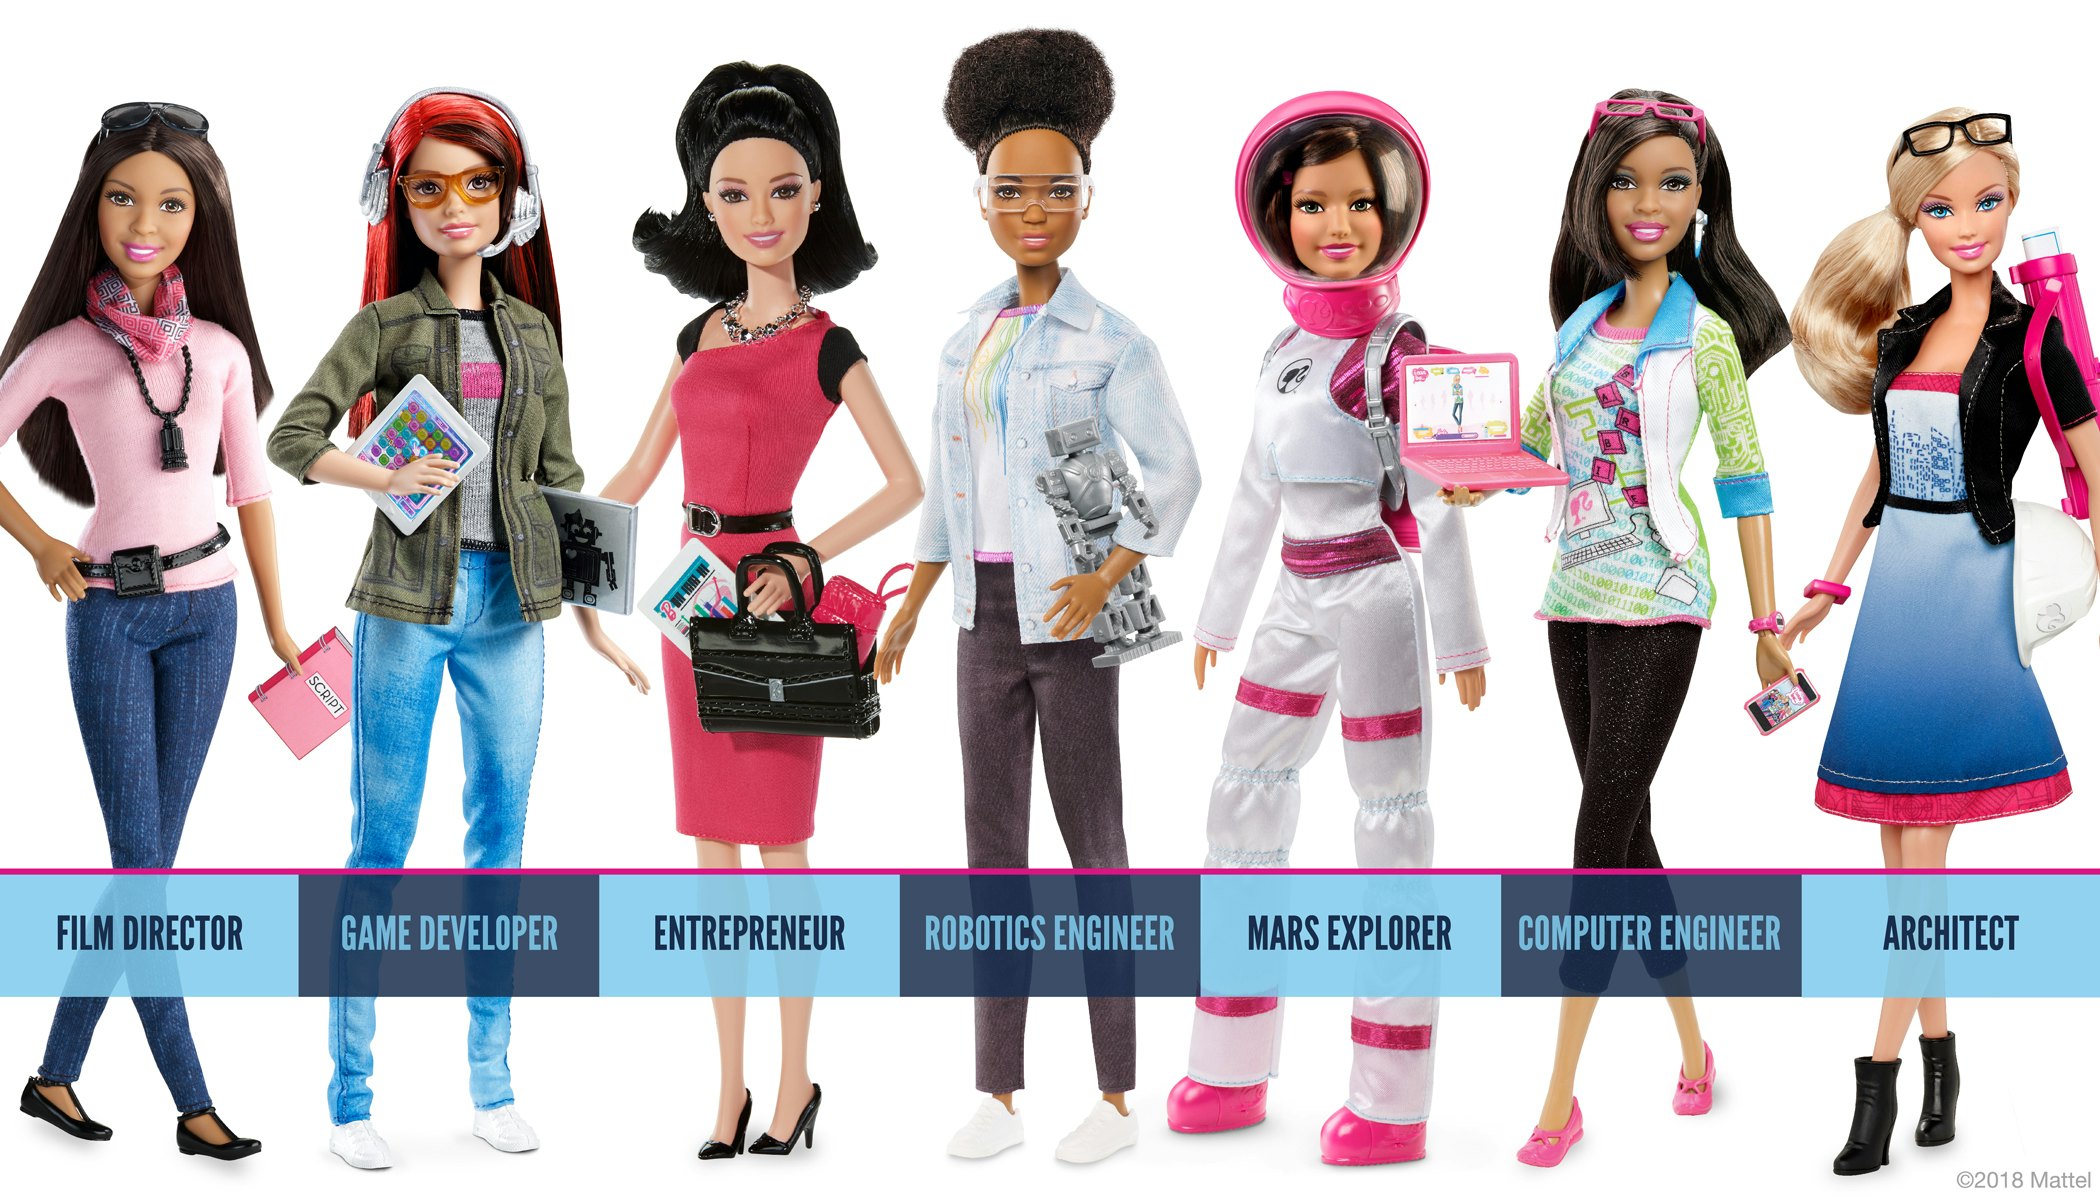 barbie robotics engineer doll